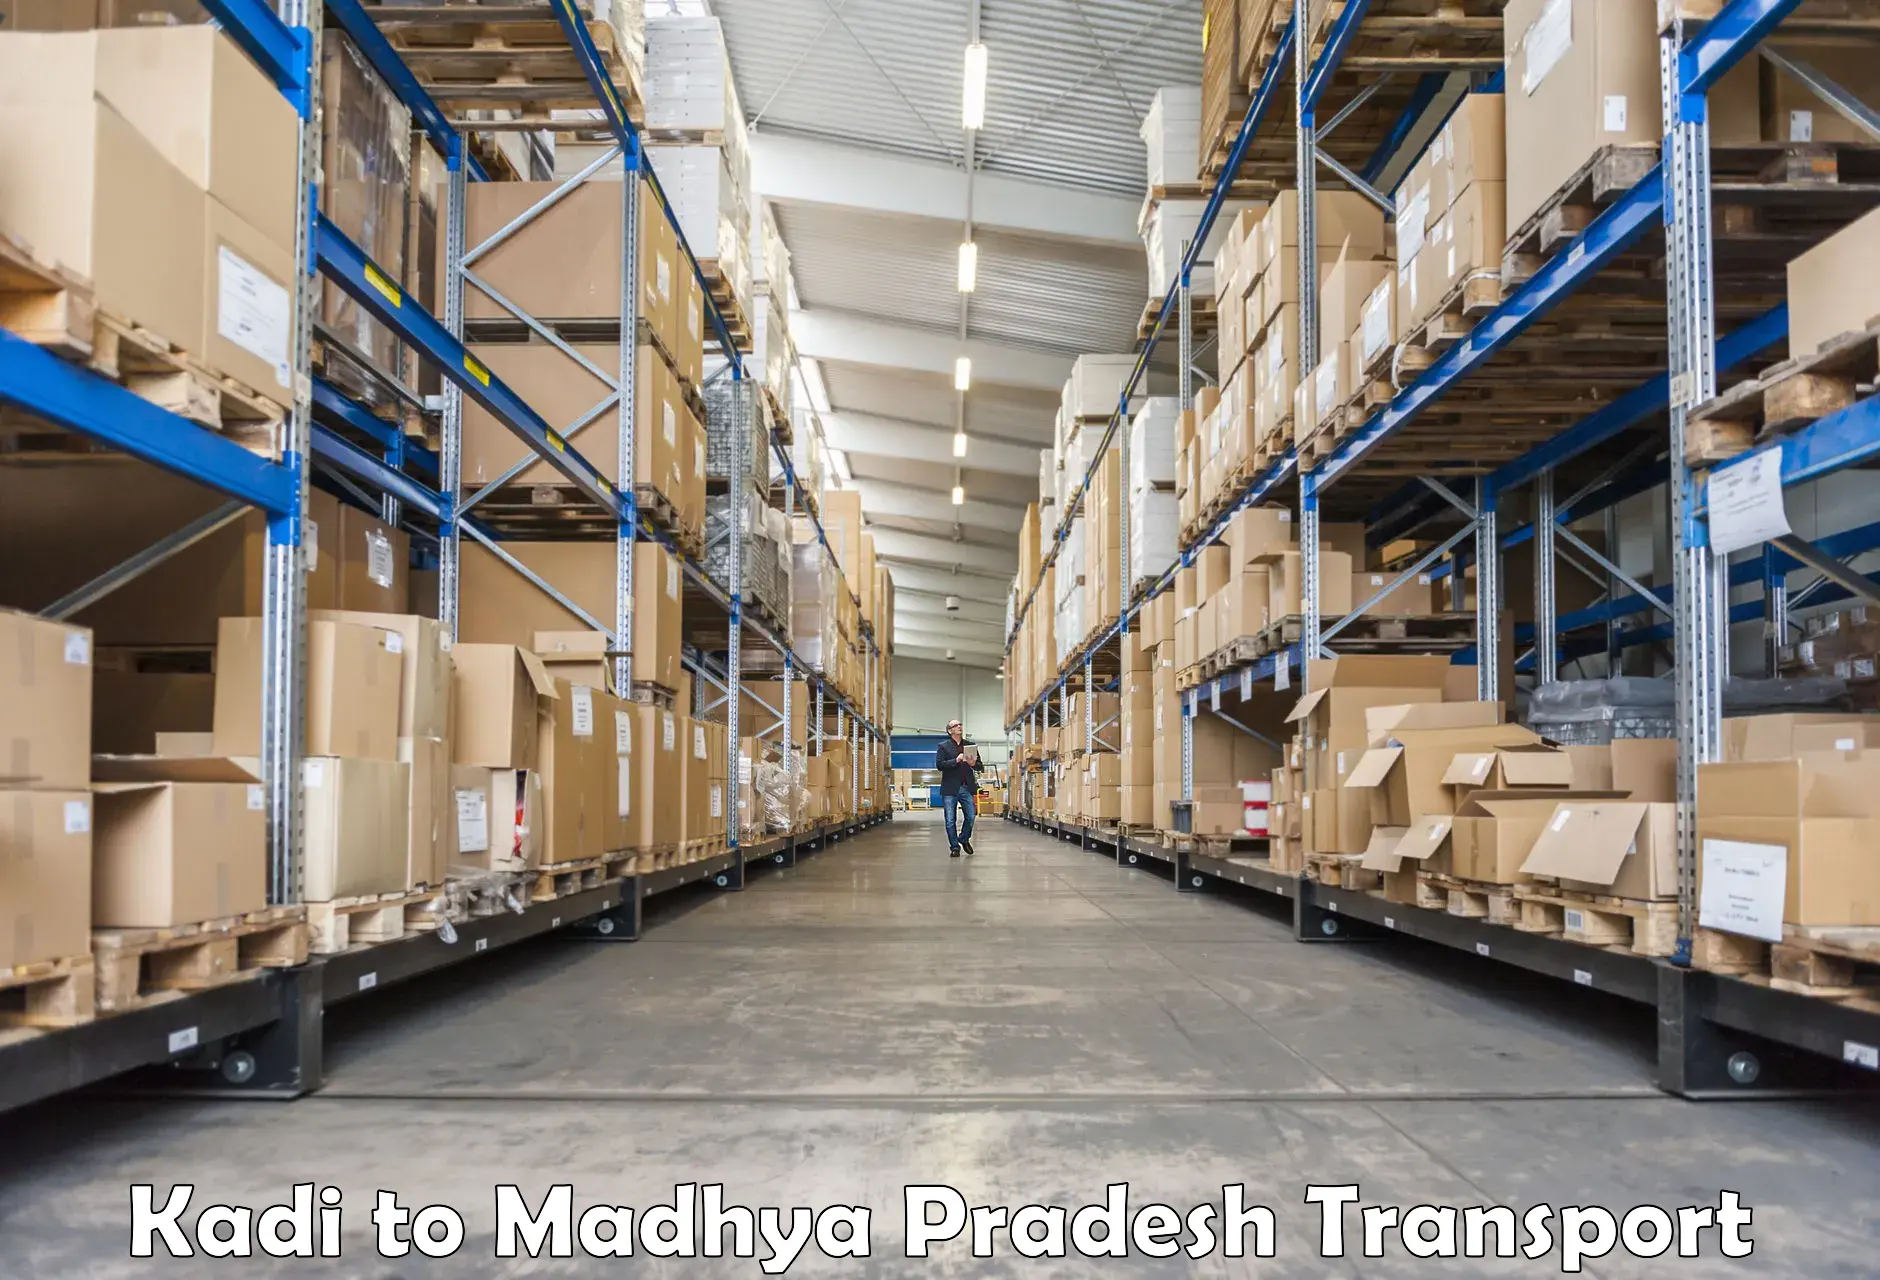 Truck transport companies in India Kadi to Chhatarpur